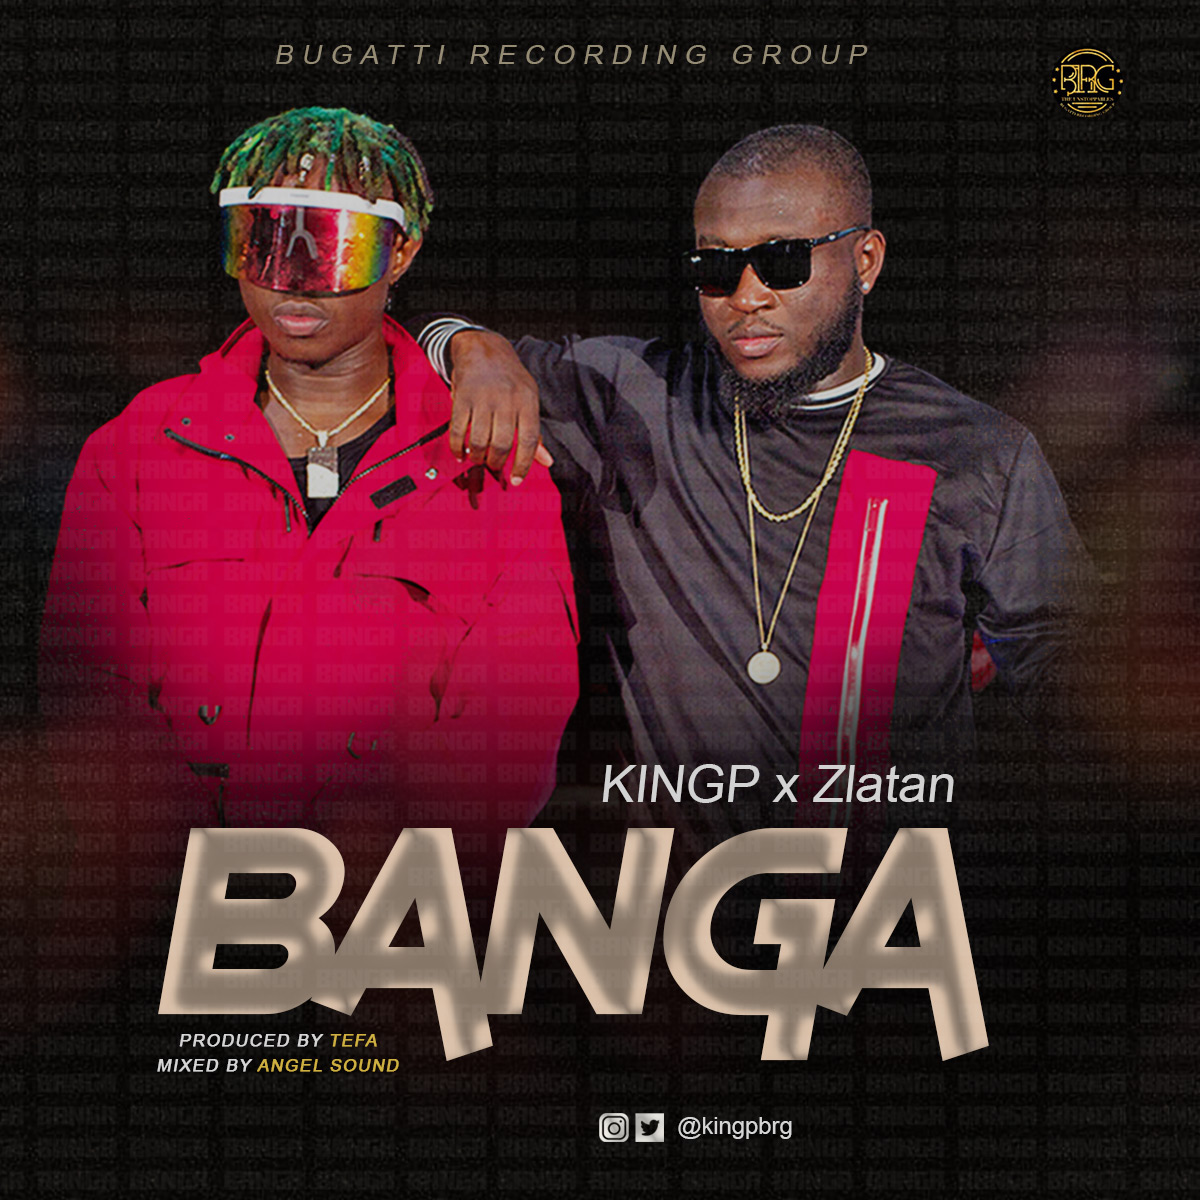 KingP - Banga Feat. Zlatan (Prod. By Tefa) 18